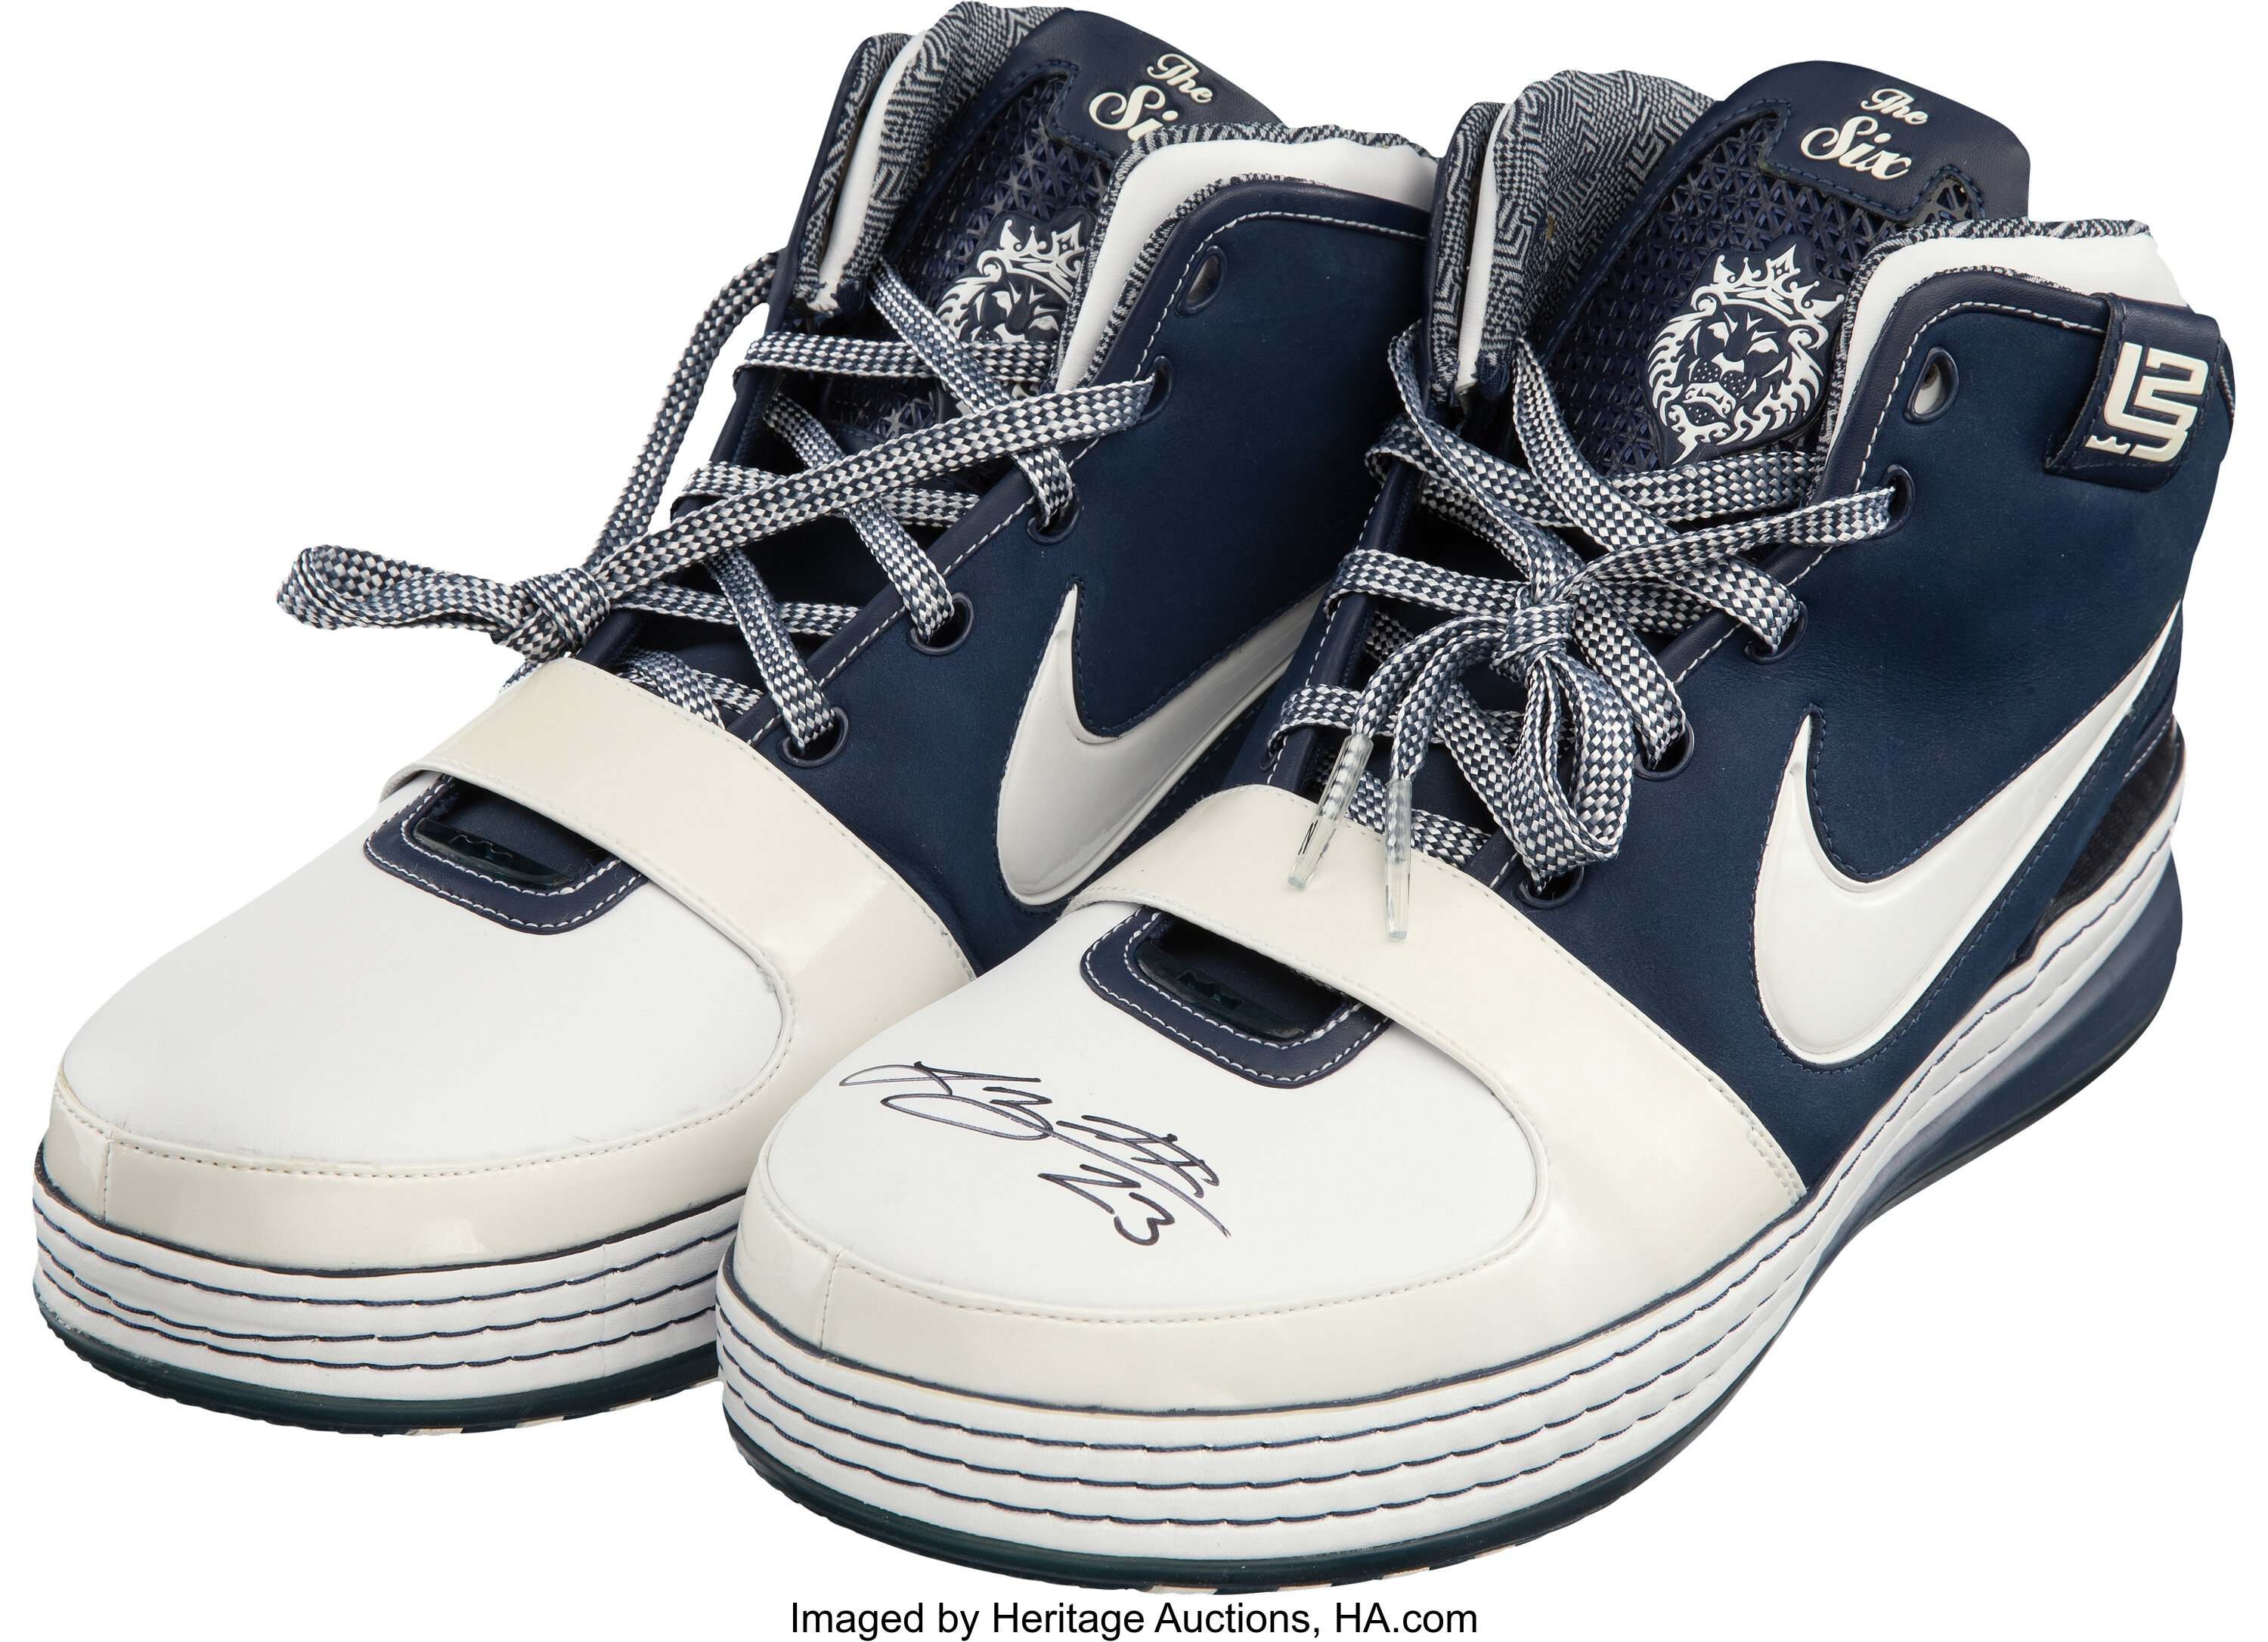 2008 LeBron James Signed Nike Zoom LeBron VI New York Yankees